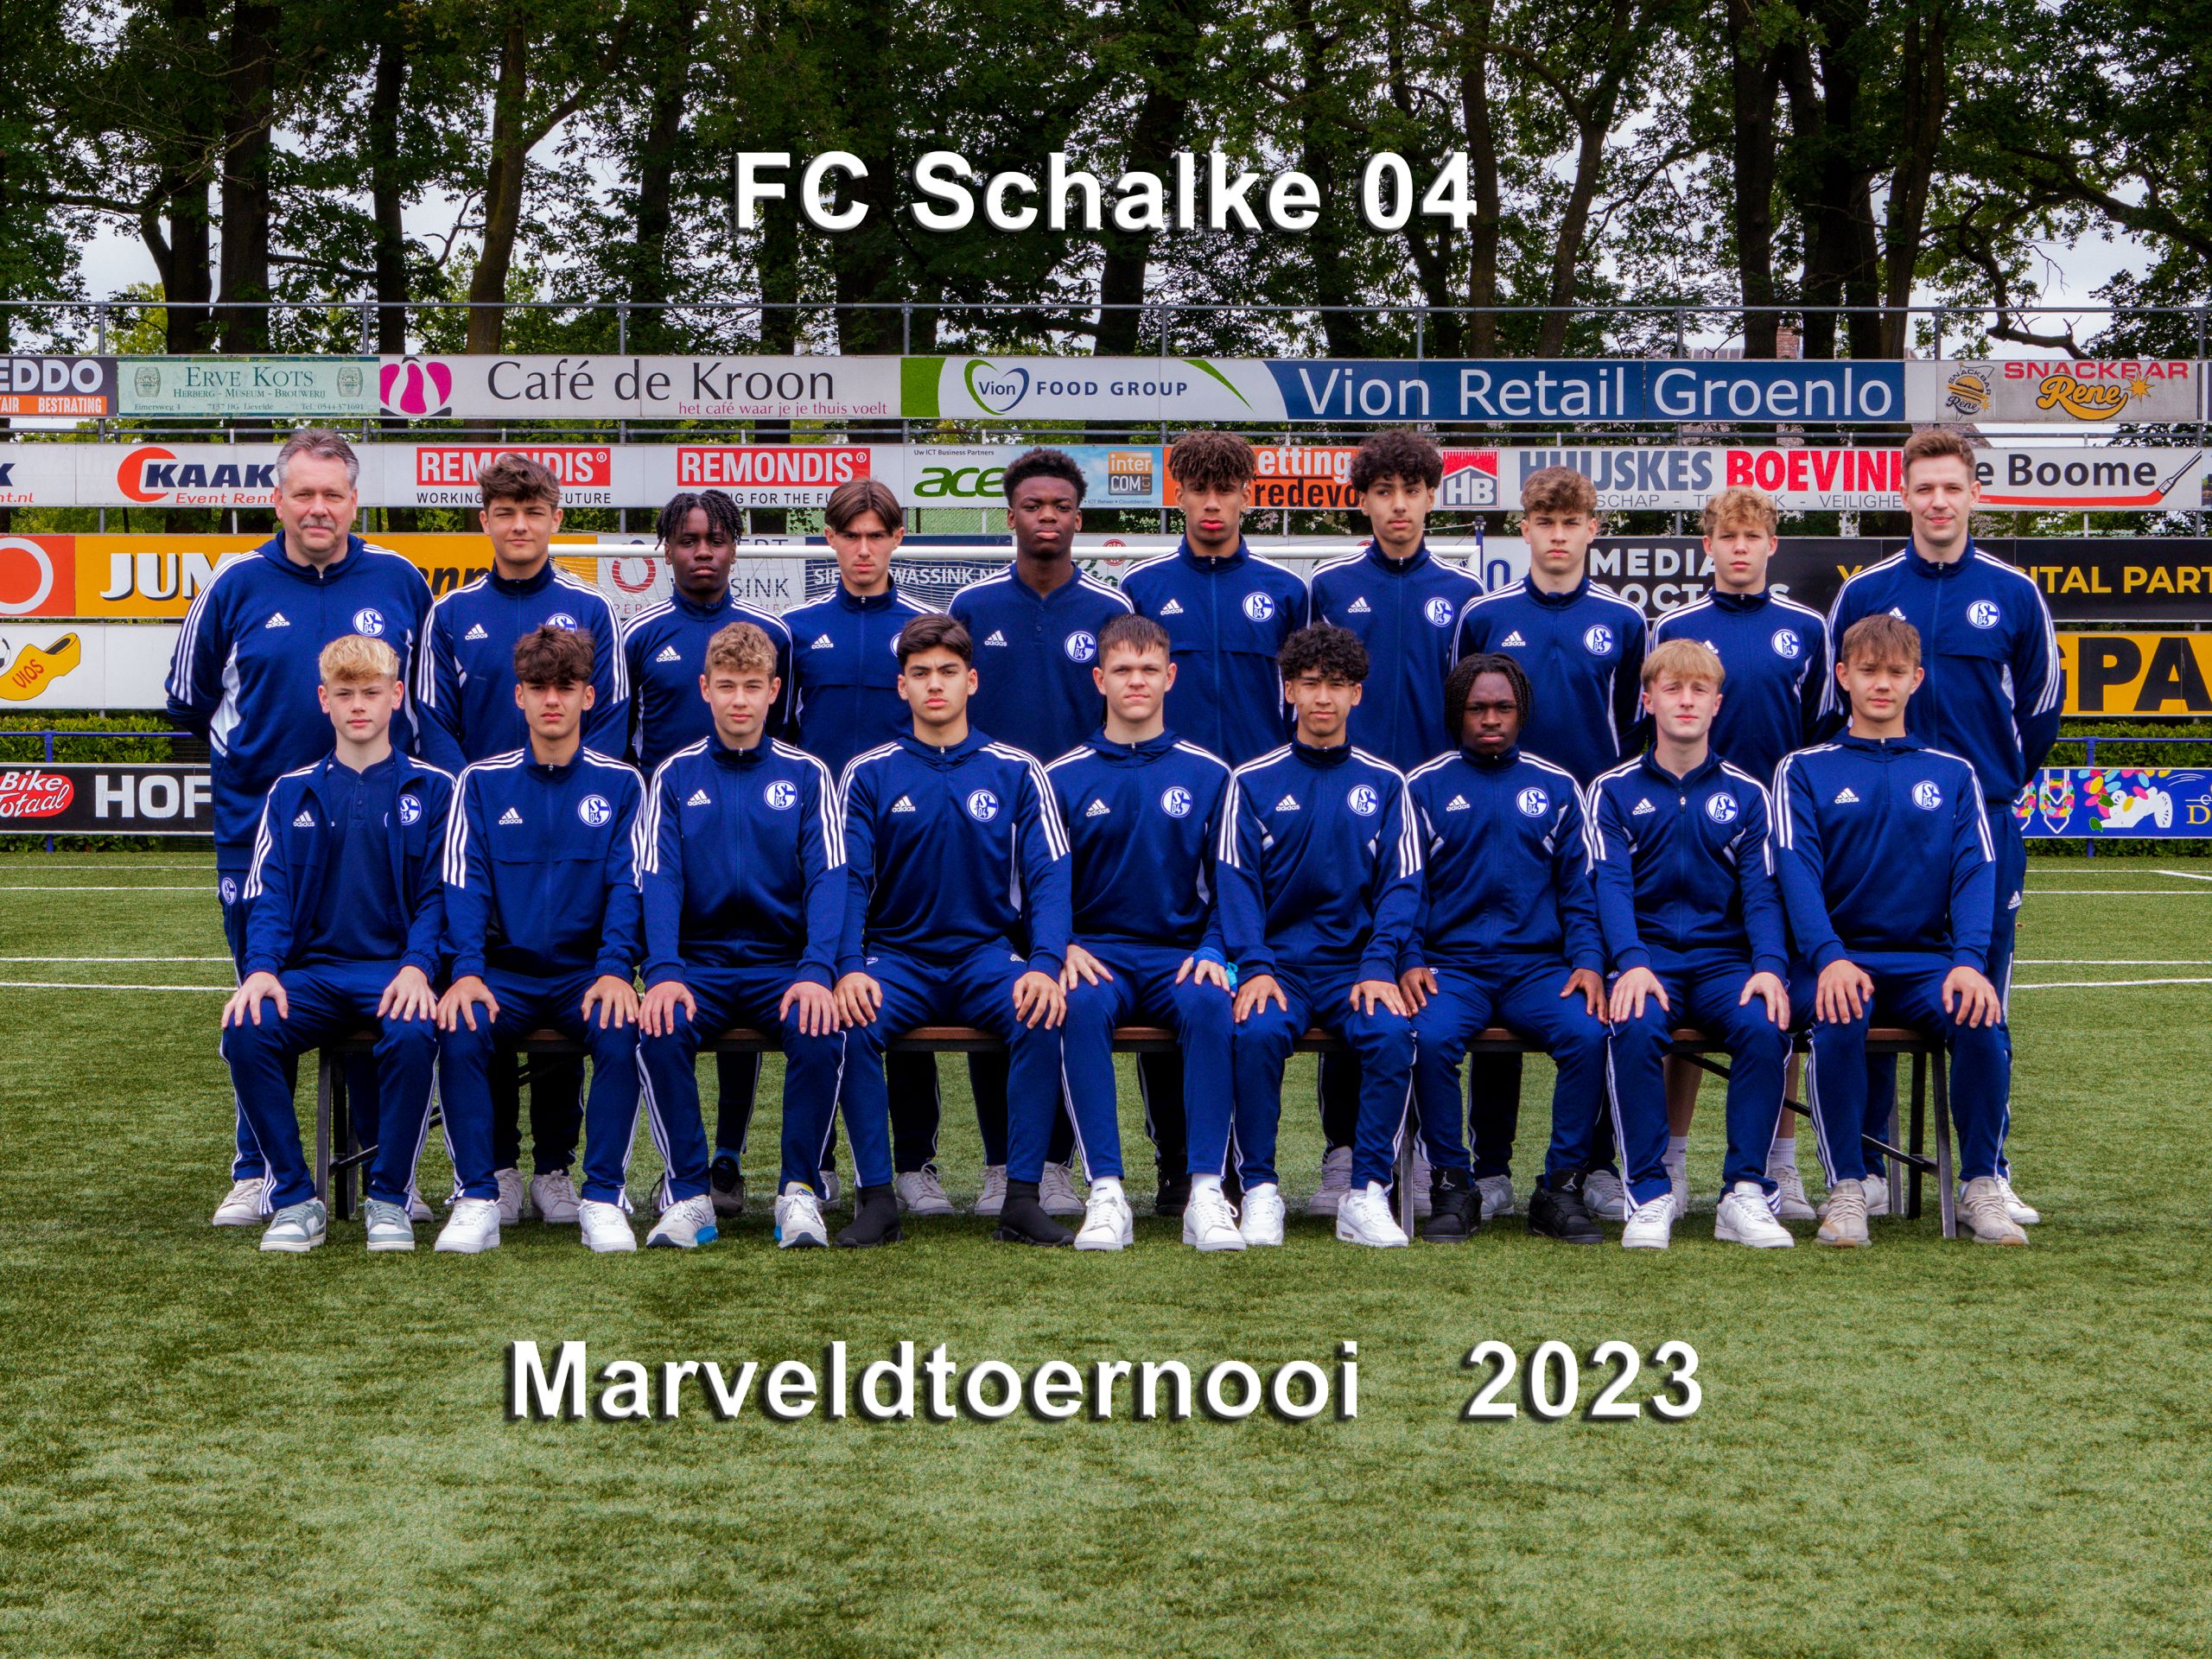 Marveld Tournament 2023 - Team FC Schalke 04